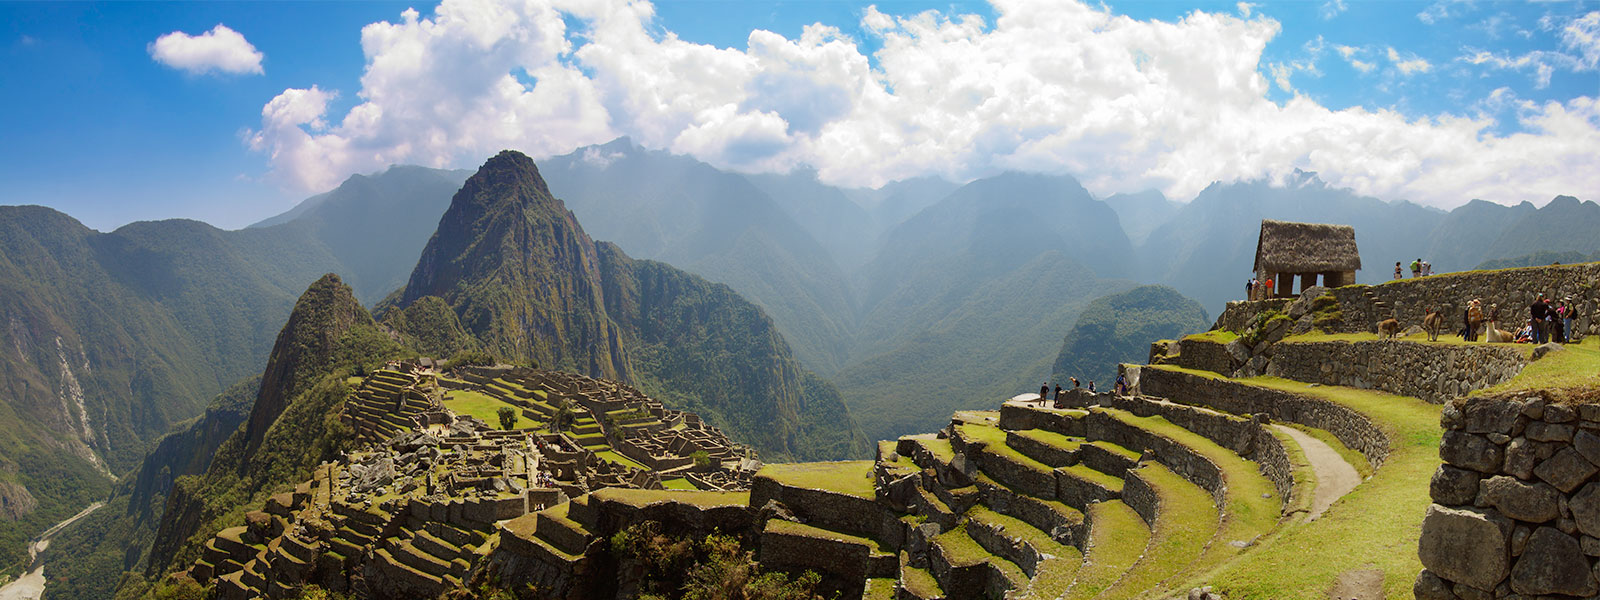 Machu Picchu Backgrounds on Wallpapers Vista